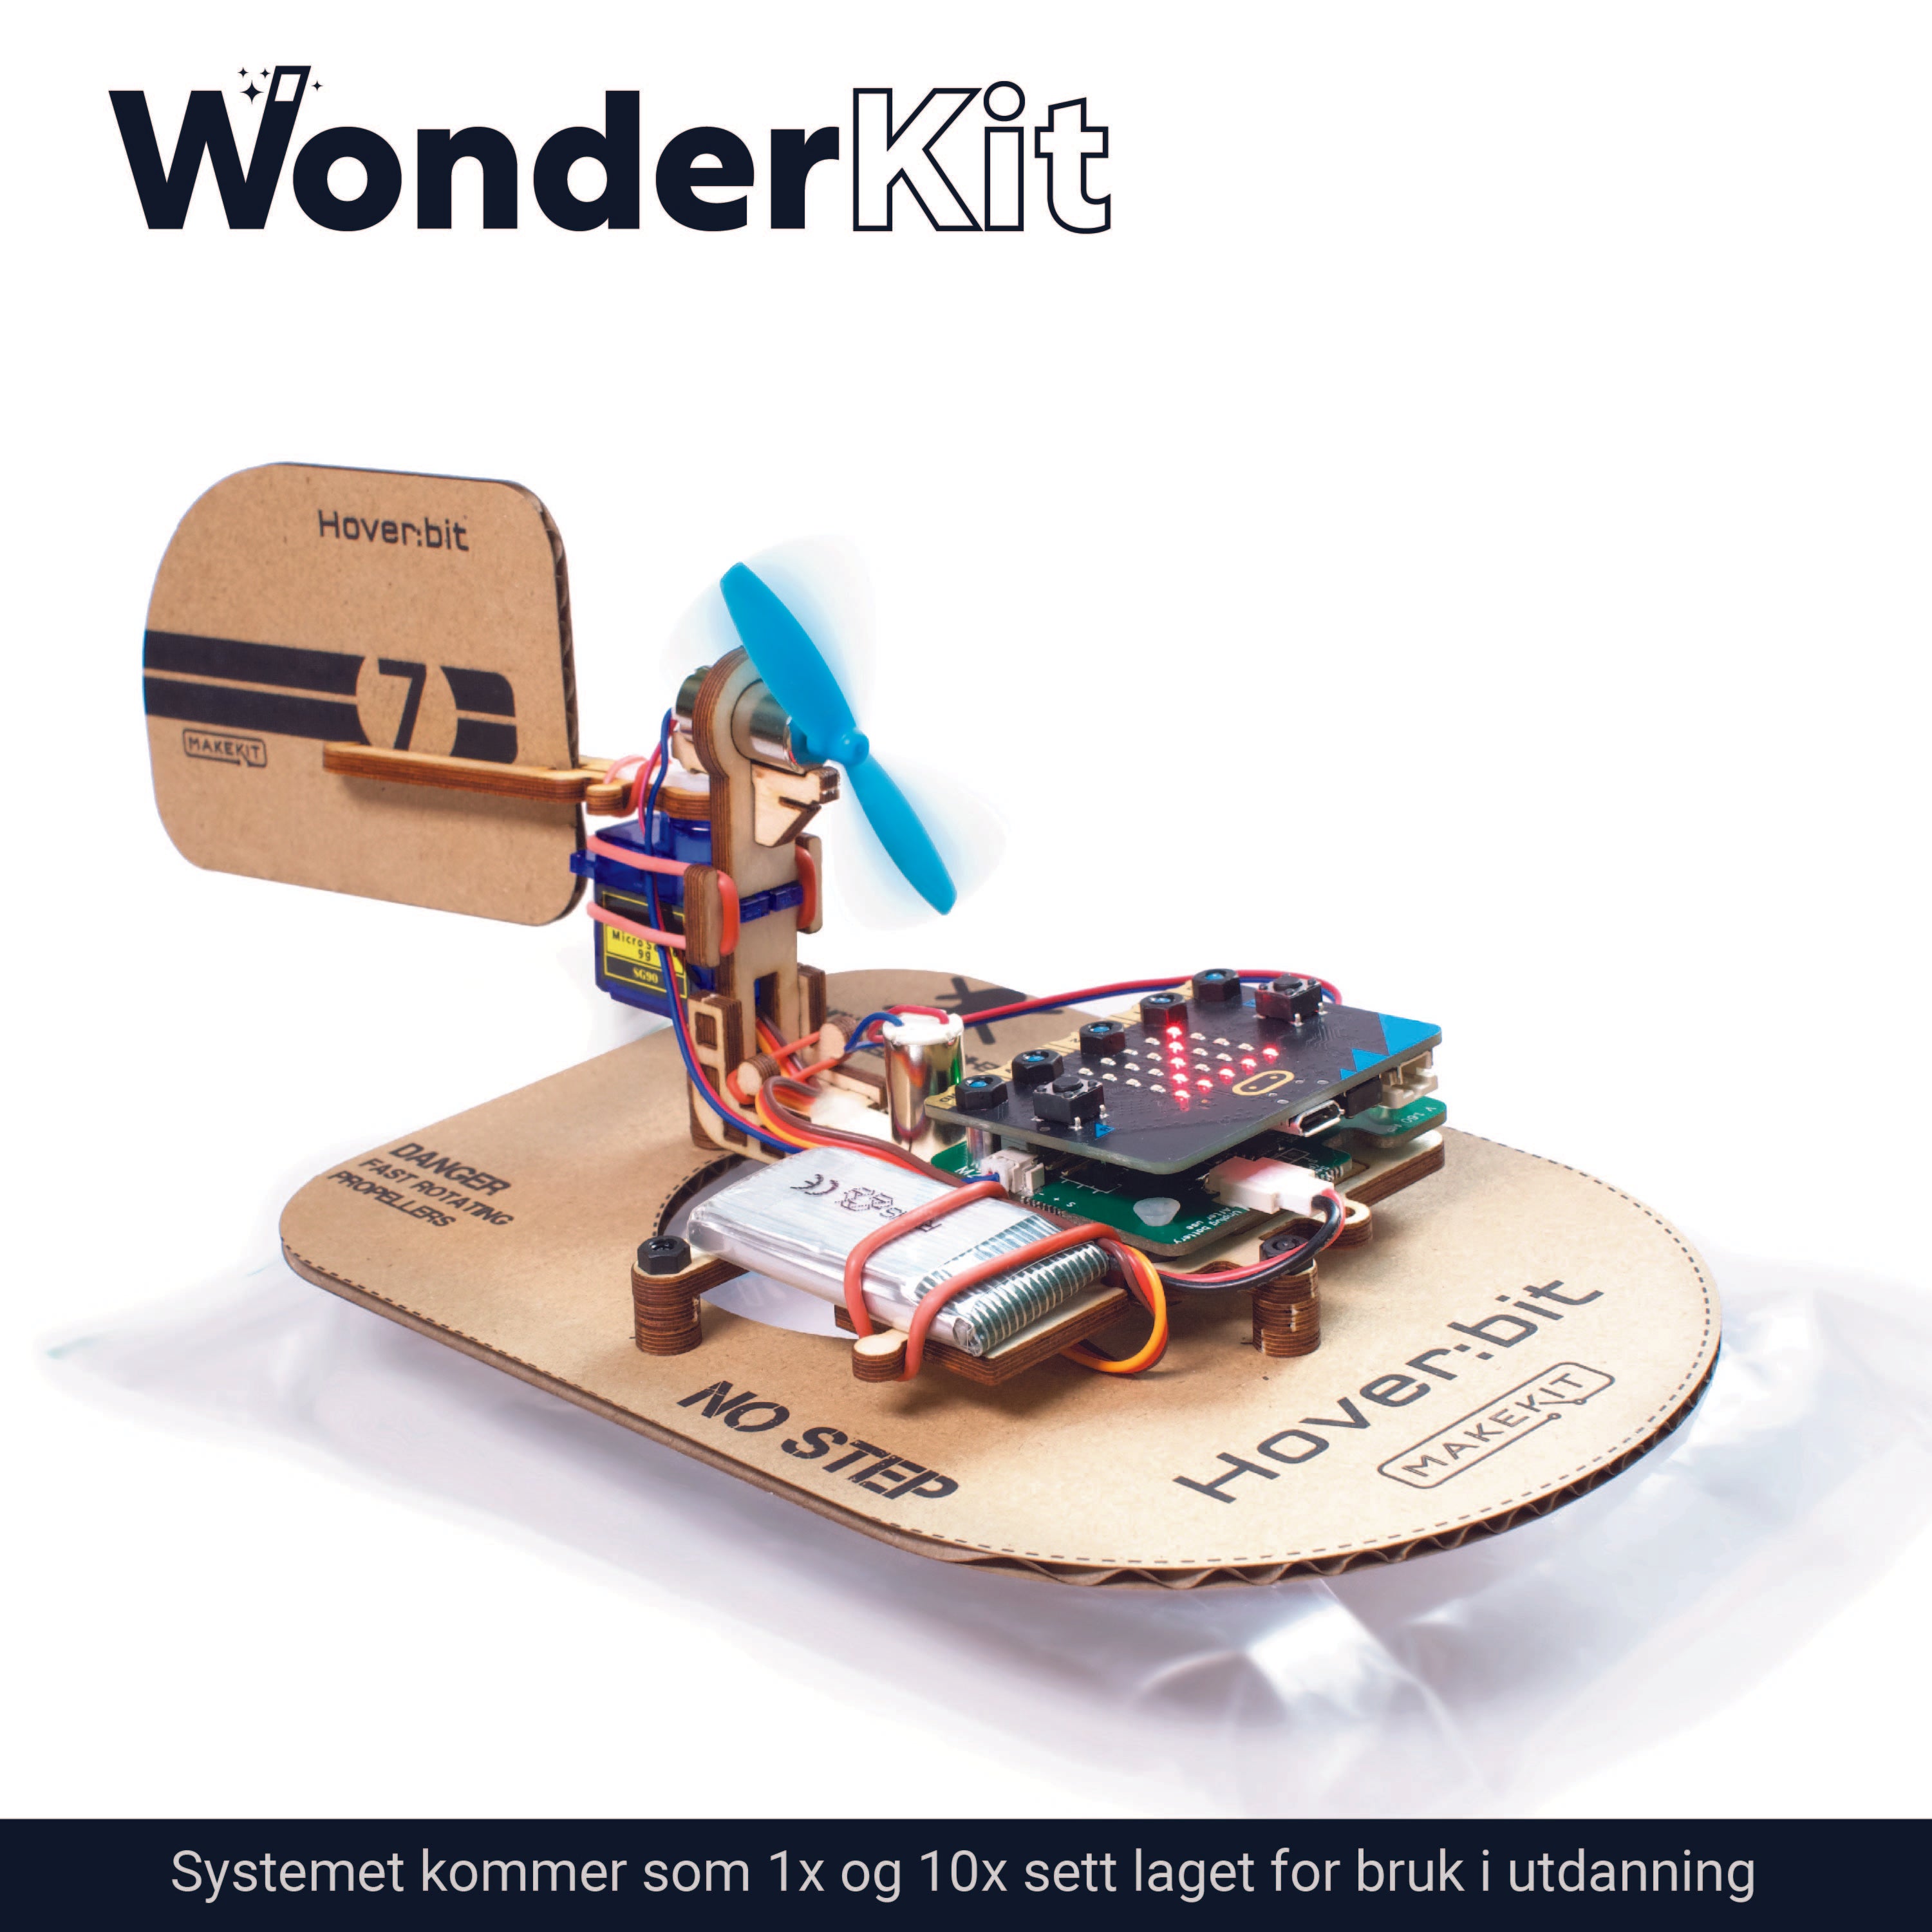 Wonder: Kit - Hover: Bit